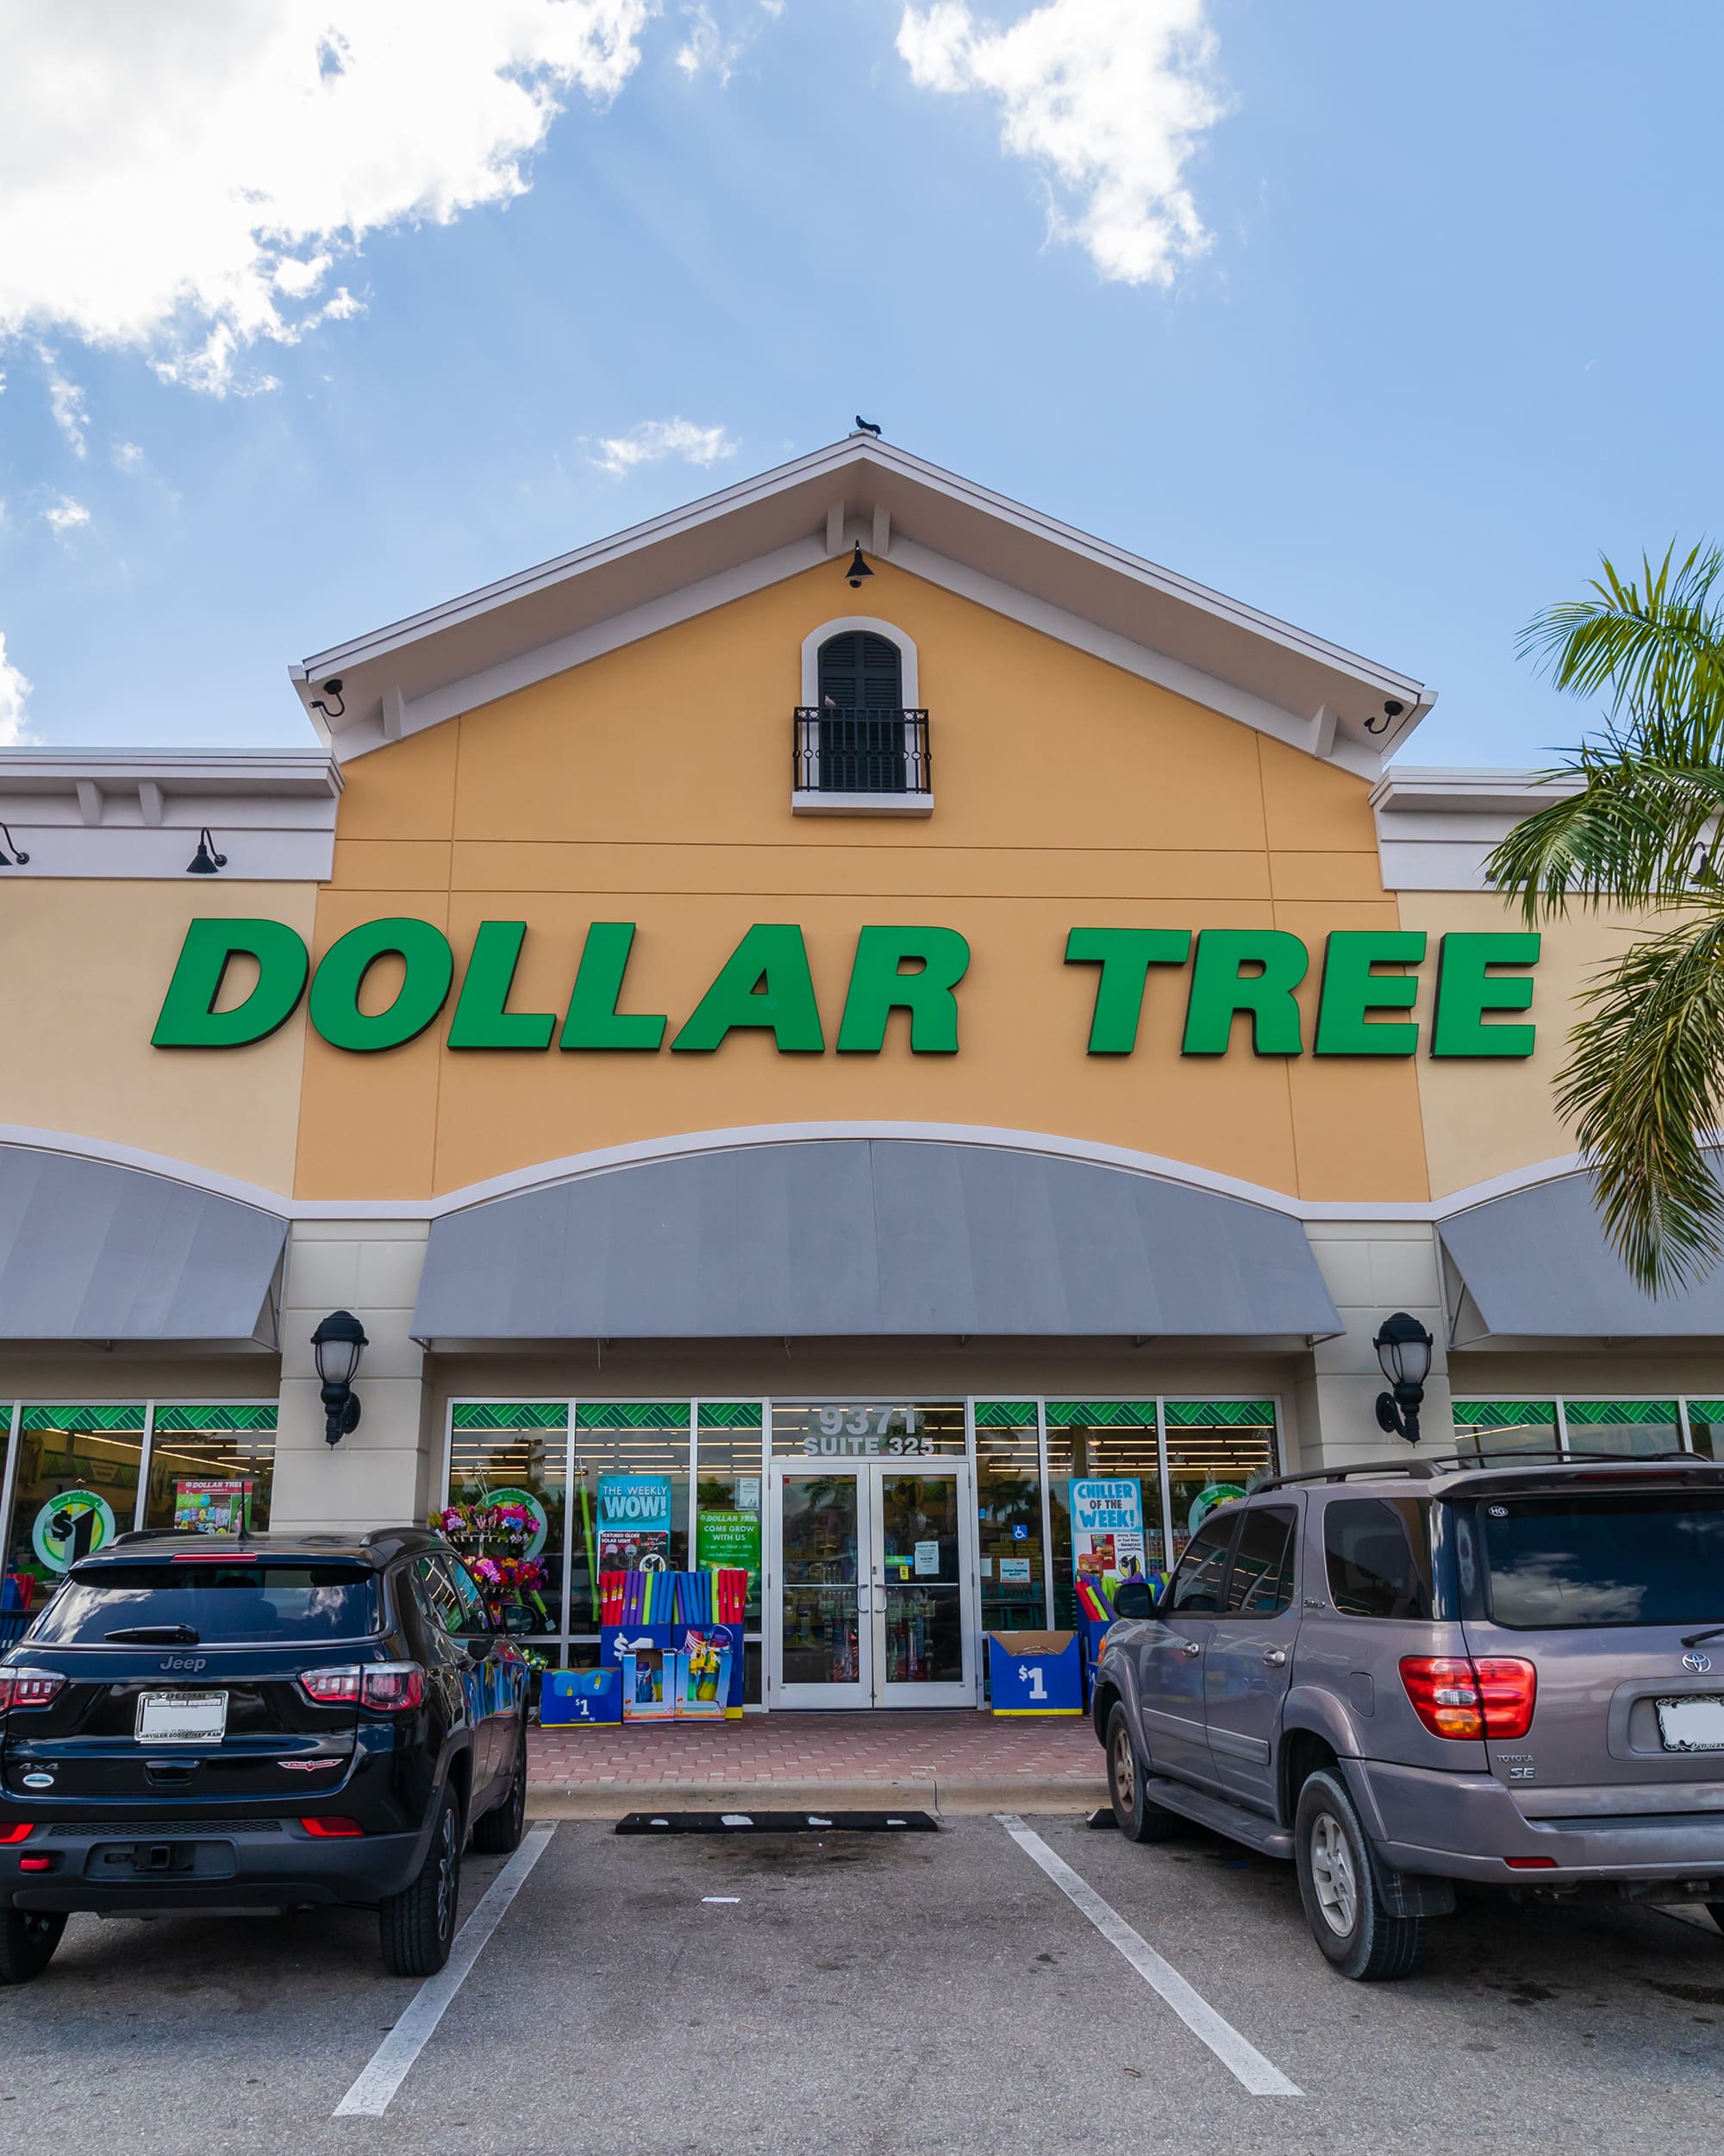 8 Items at Dollar Tree That Cost Way More at Costco